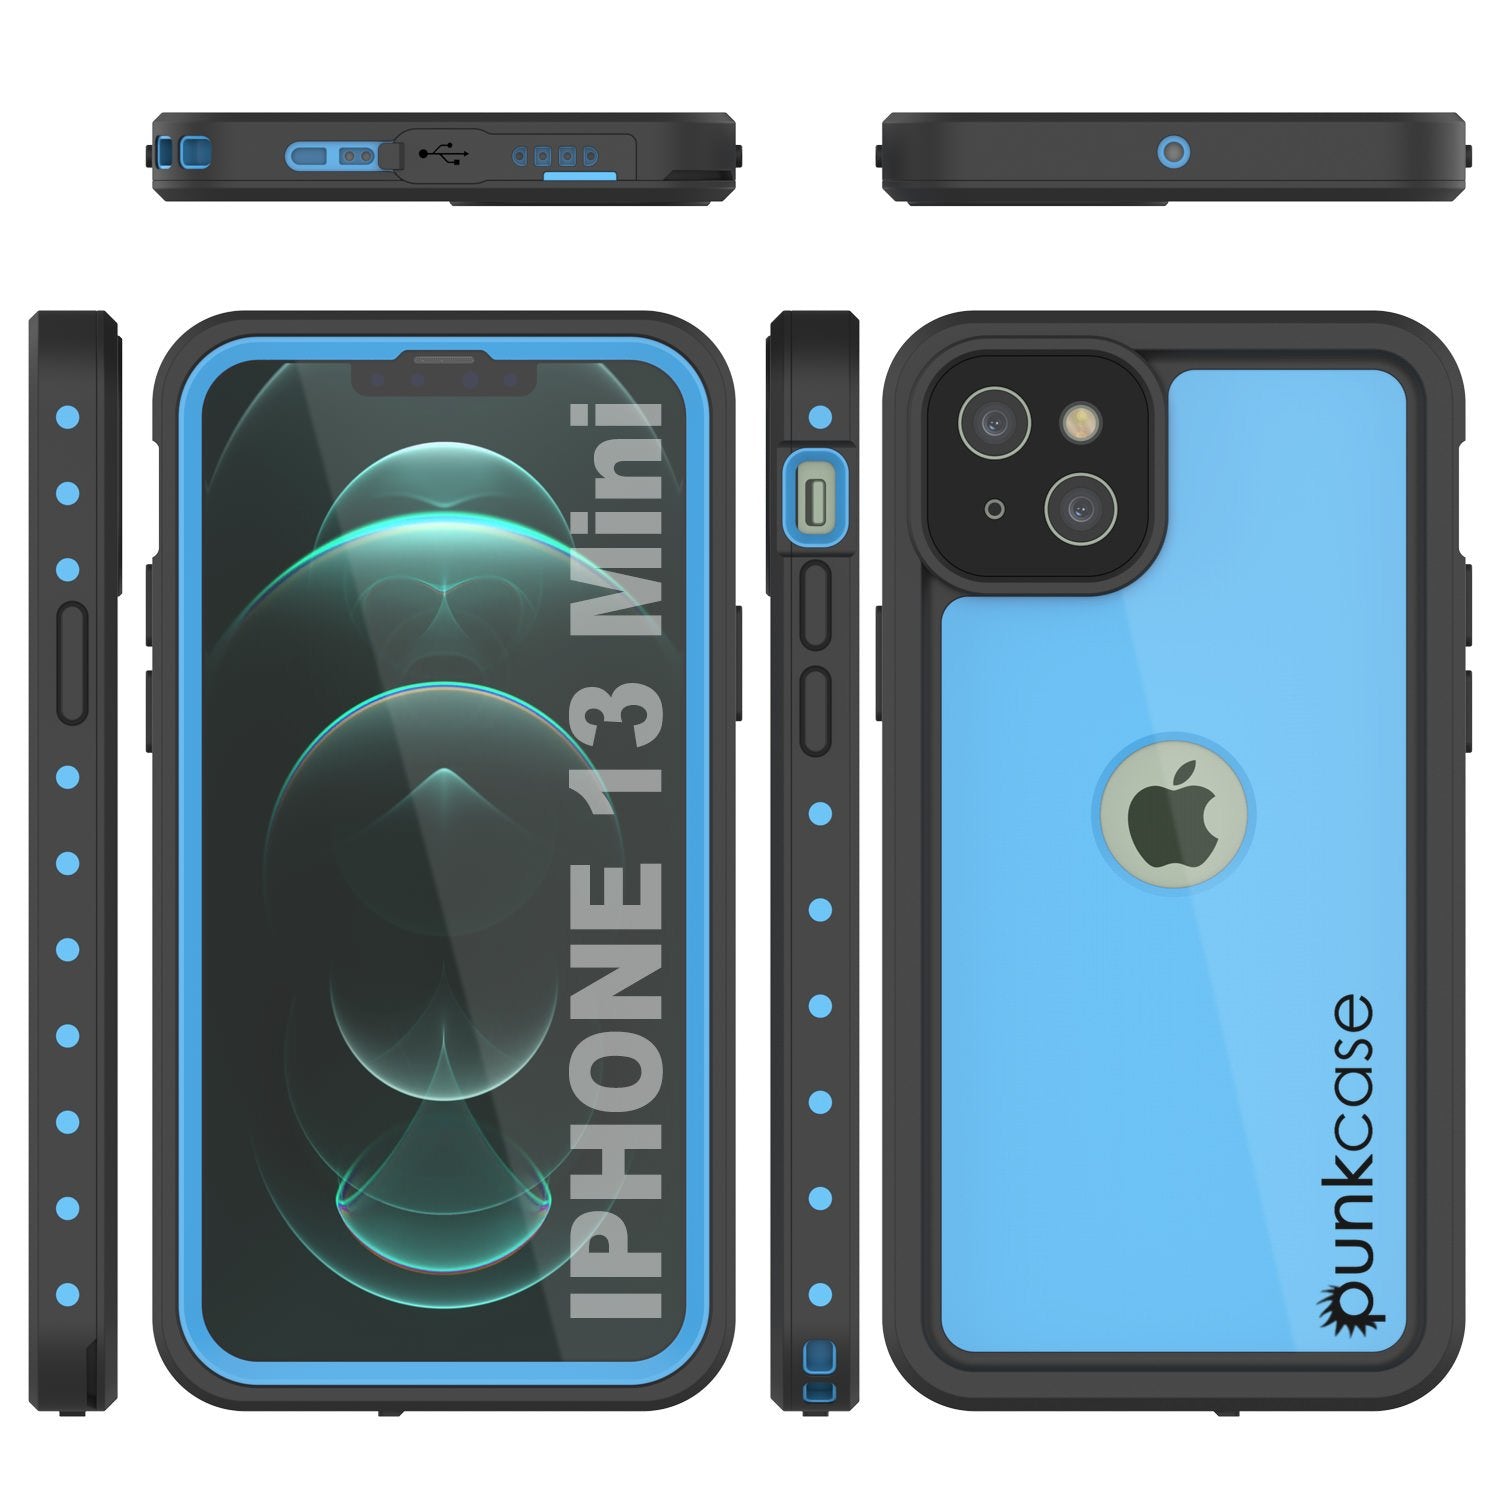 iPhone 13 Mini Waterproof IP68 Case, Punkcase [Light blue] [StudStar Series] [Slim Fit] [Dirtproof]